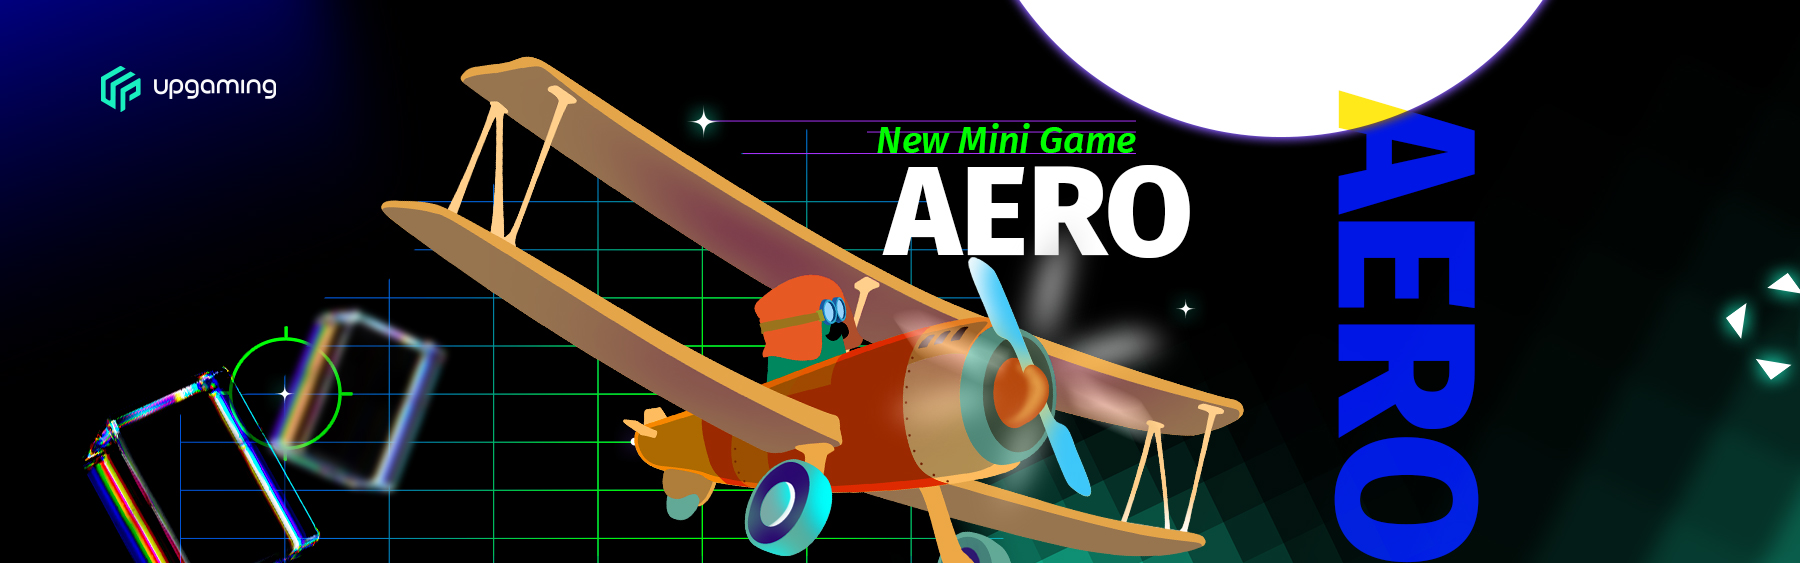 Aero - new mini game